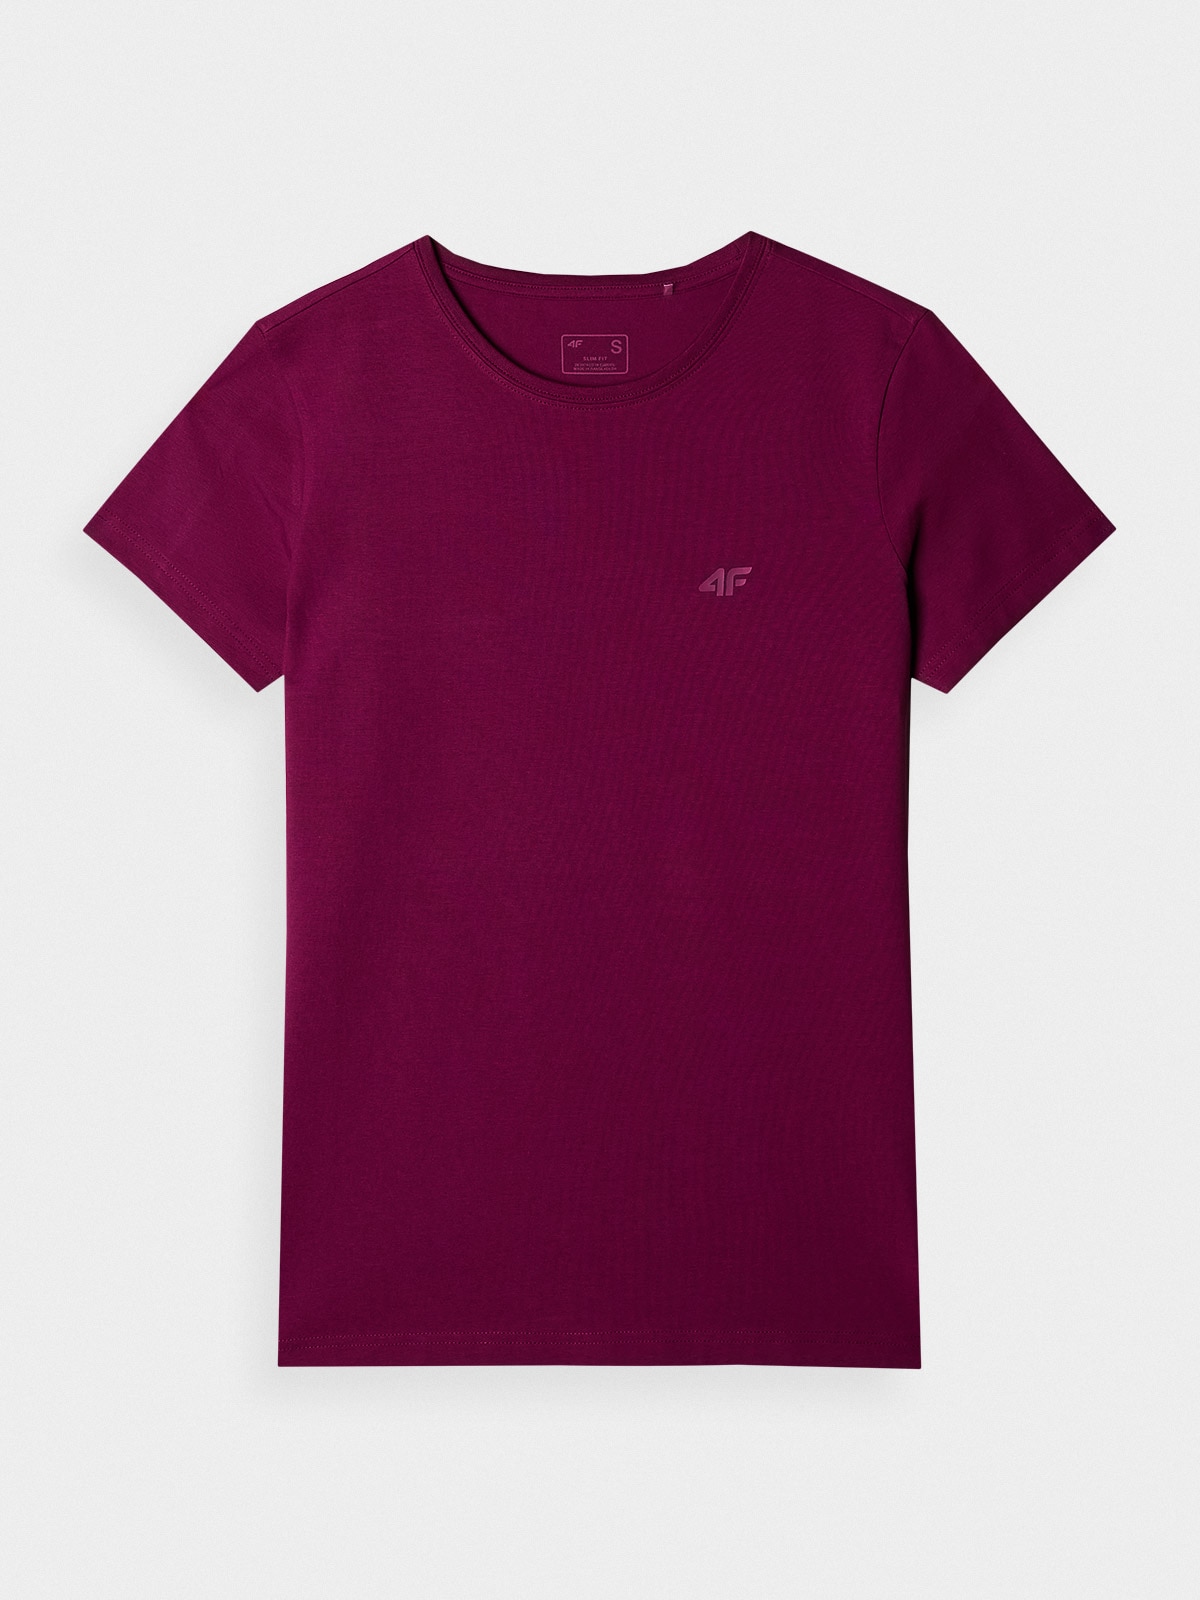 Dámské hladké tričko slim - fialové